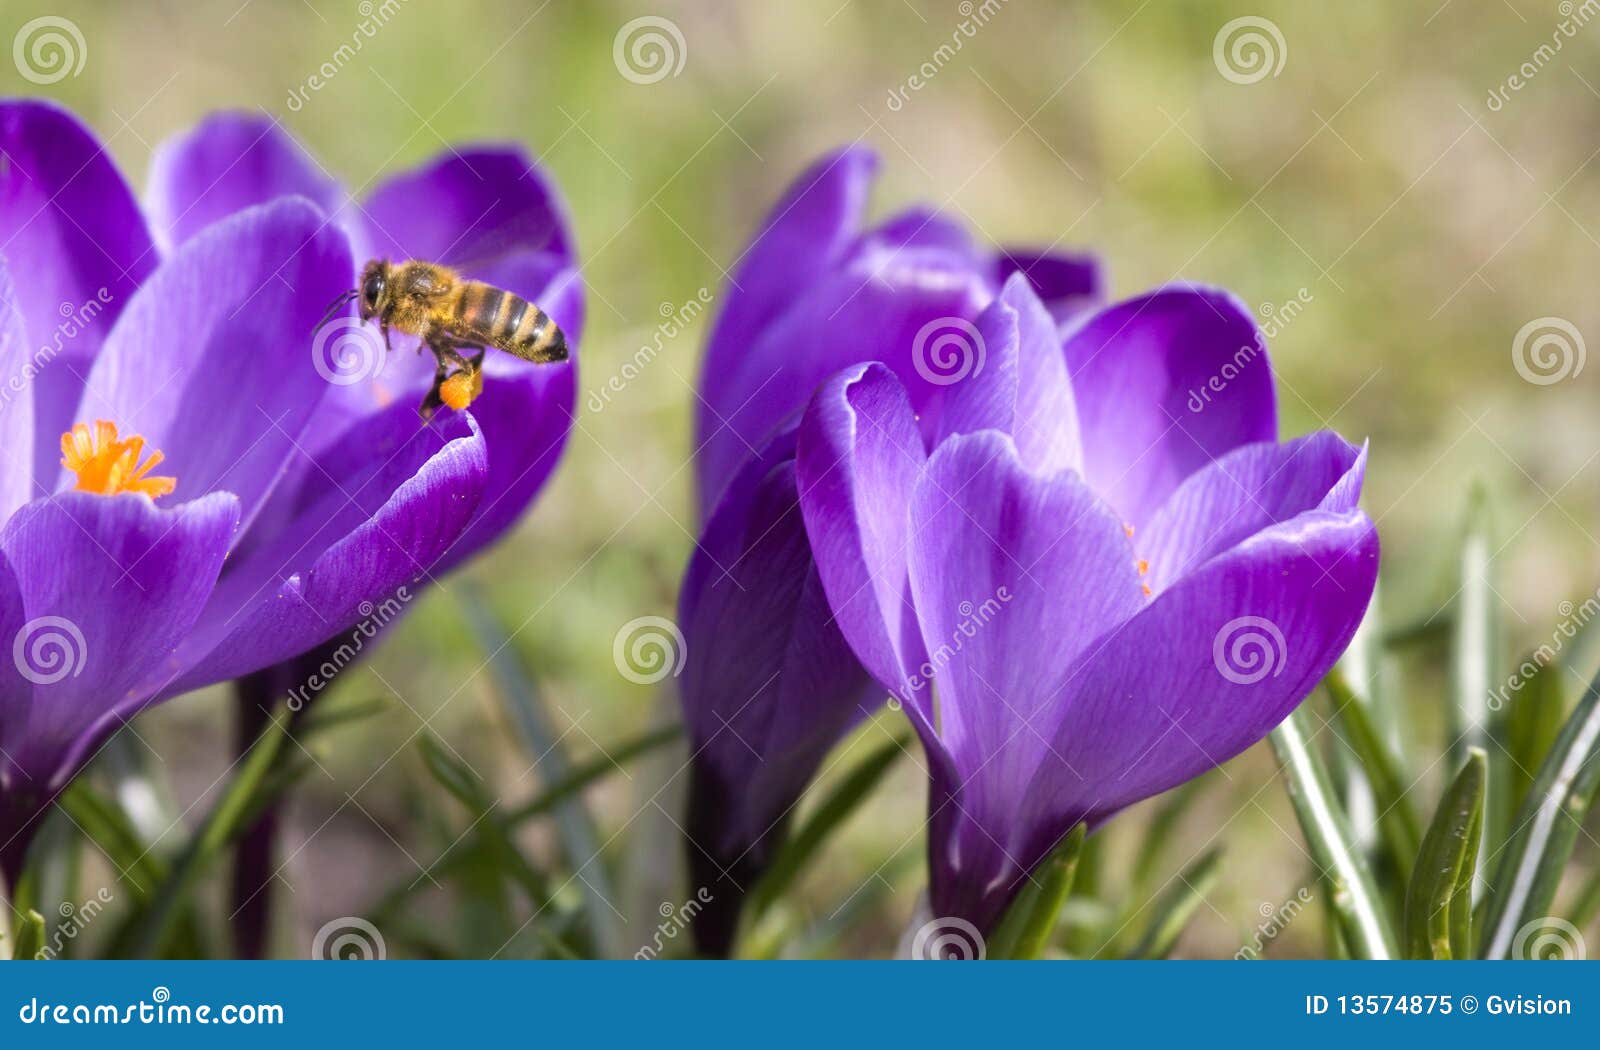 bee pollinating crocus flowers